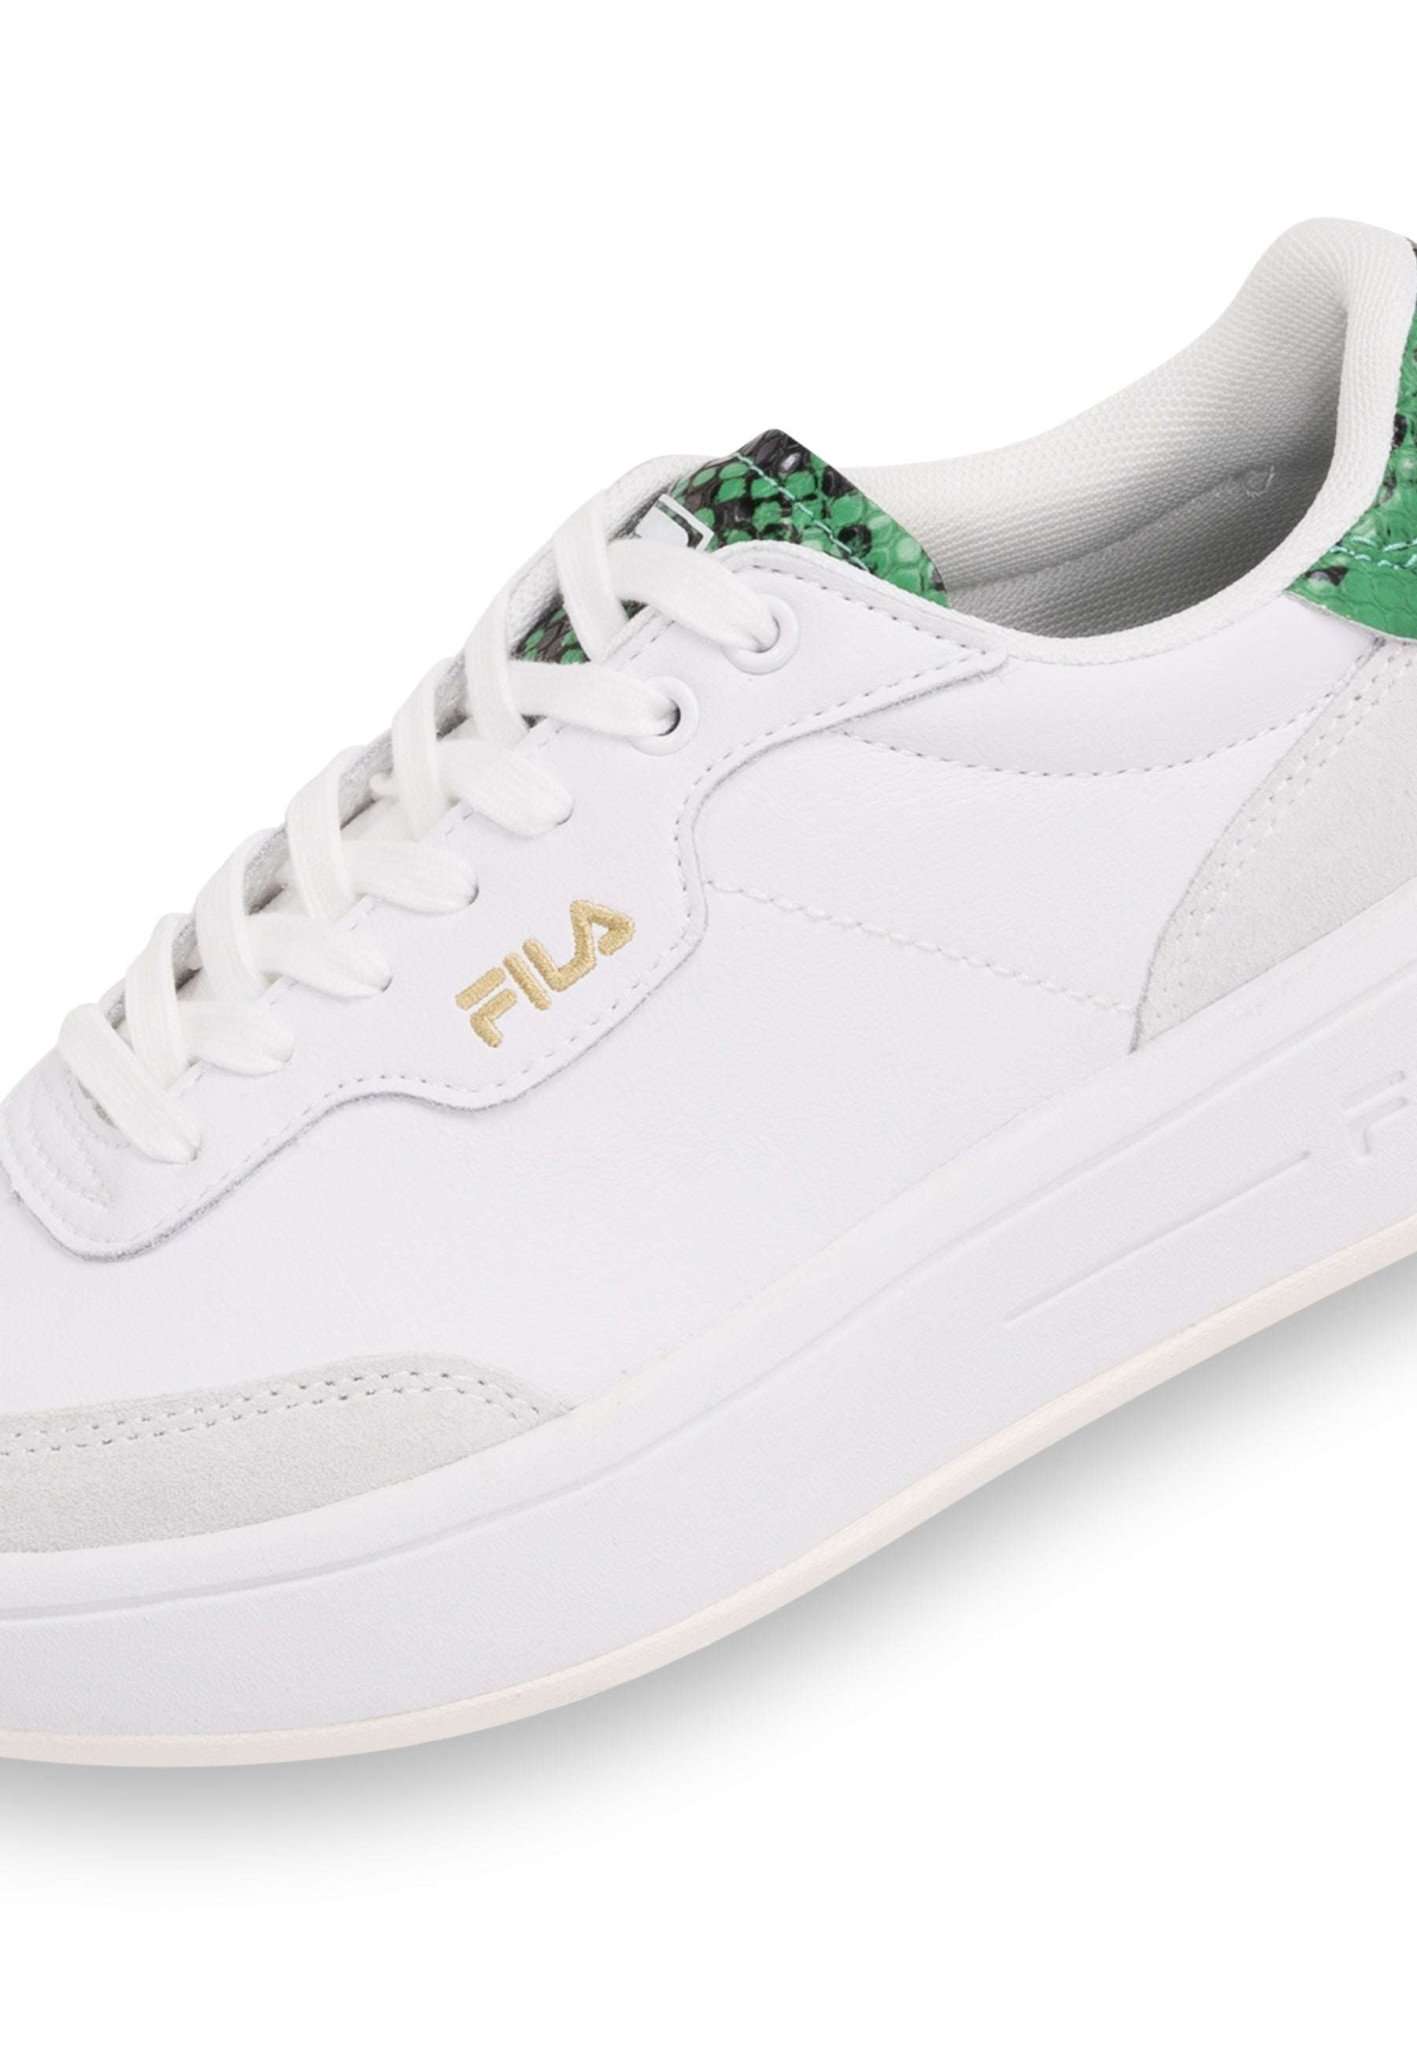 Fila Premium F Wmn in White-Verdant Green Sneakers Fila   